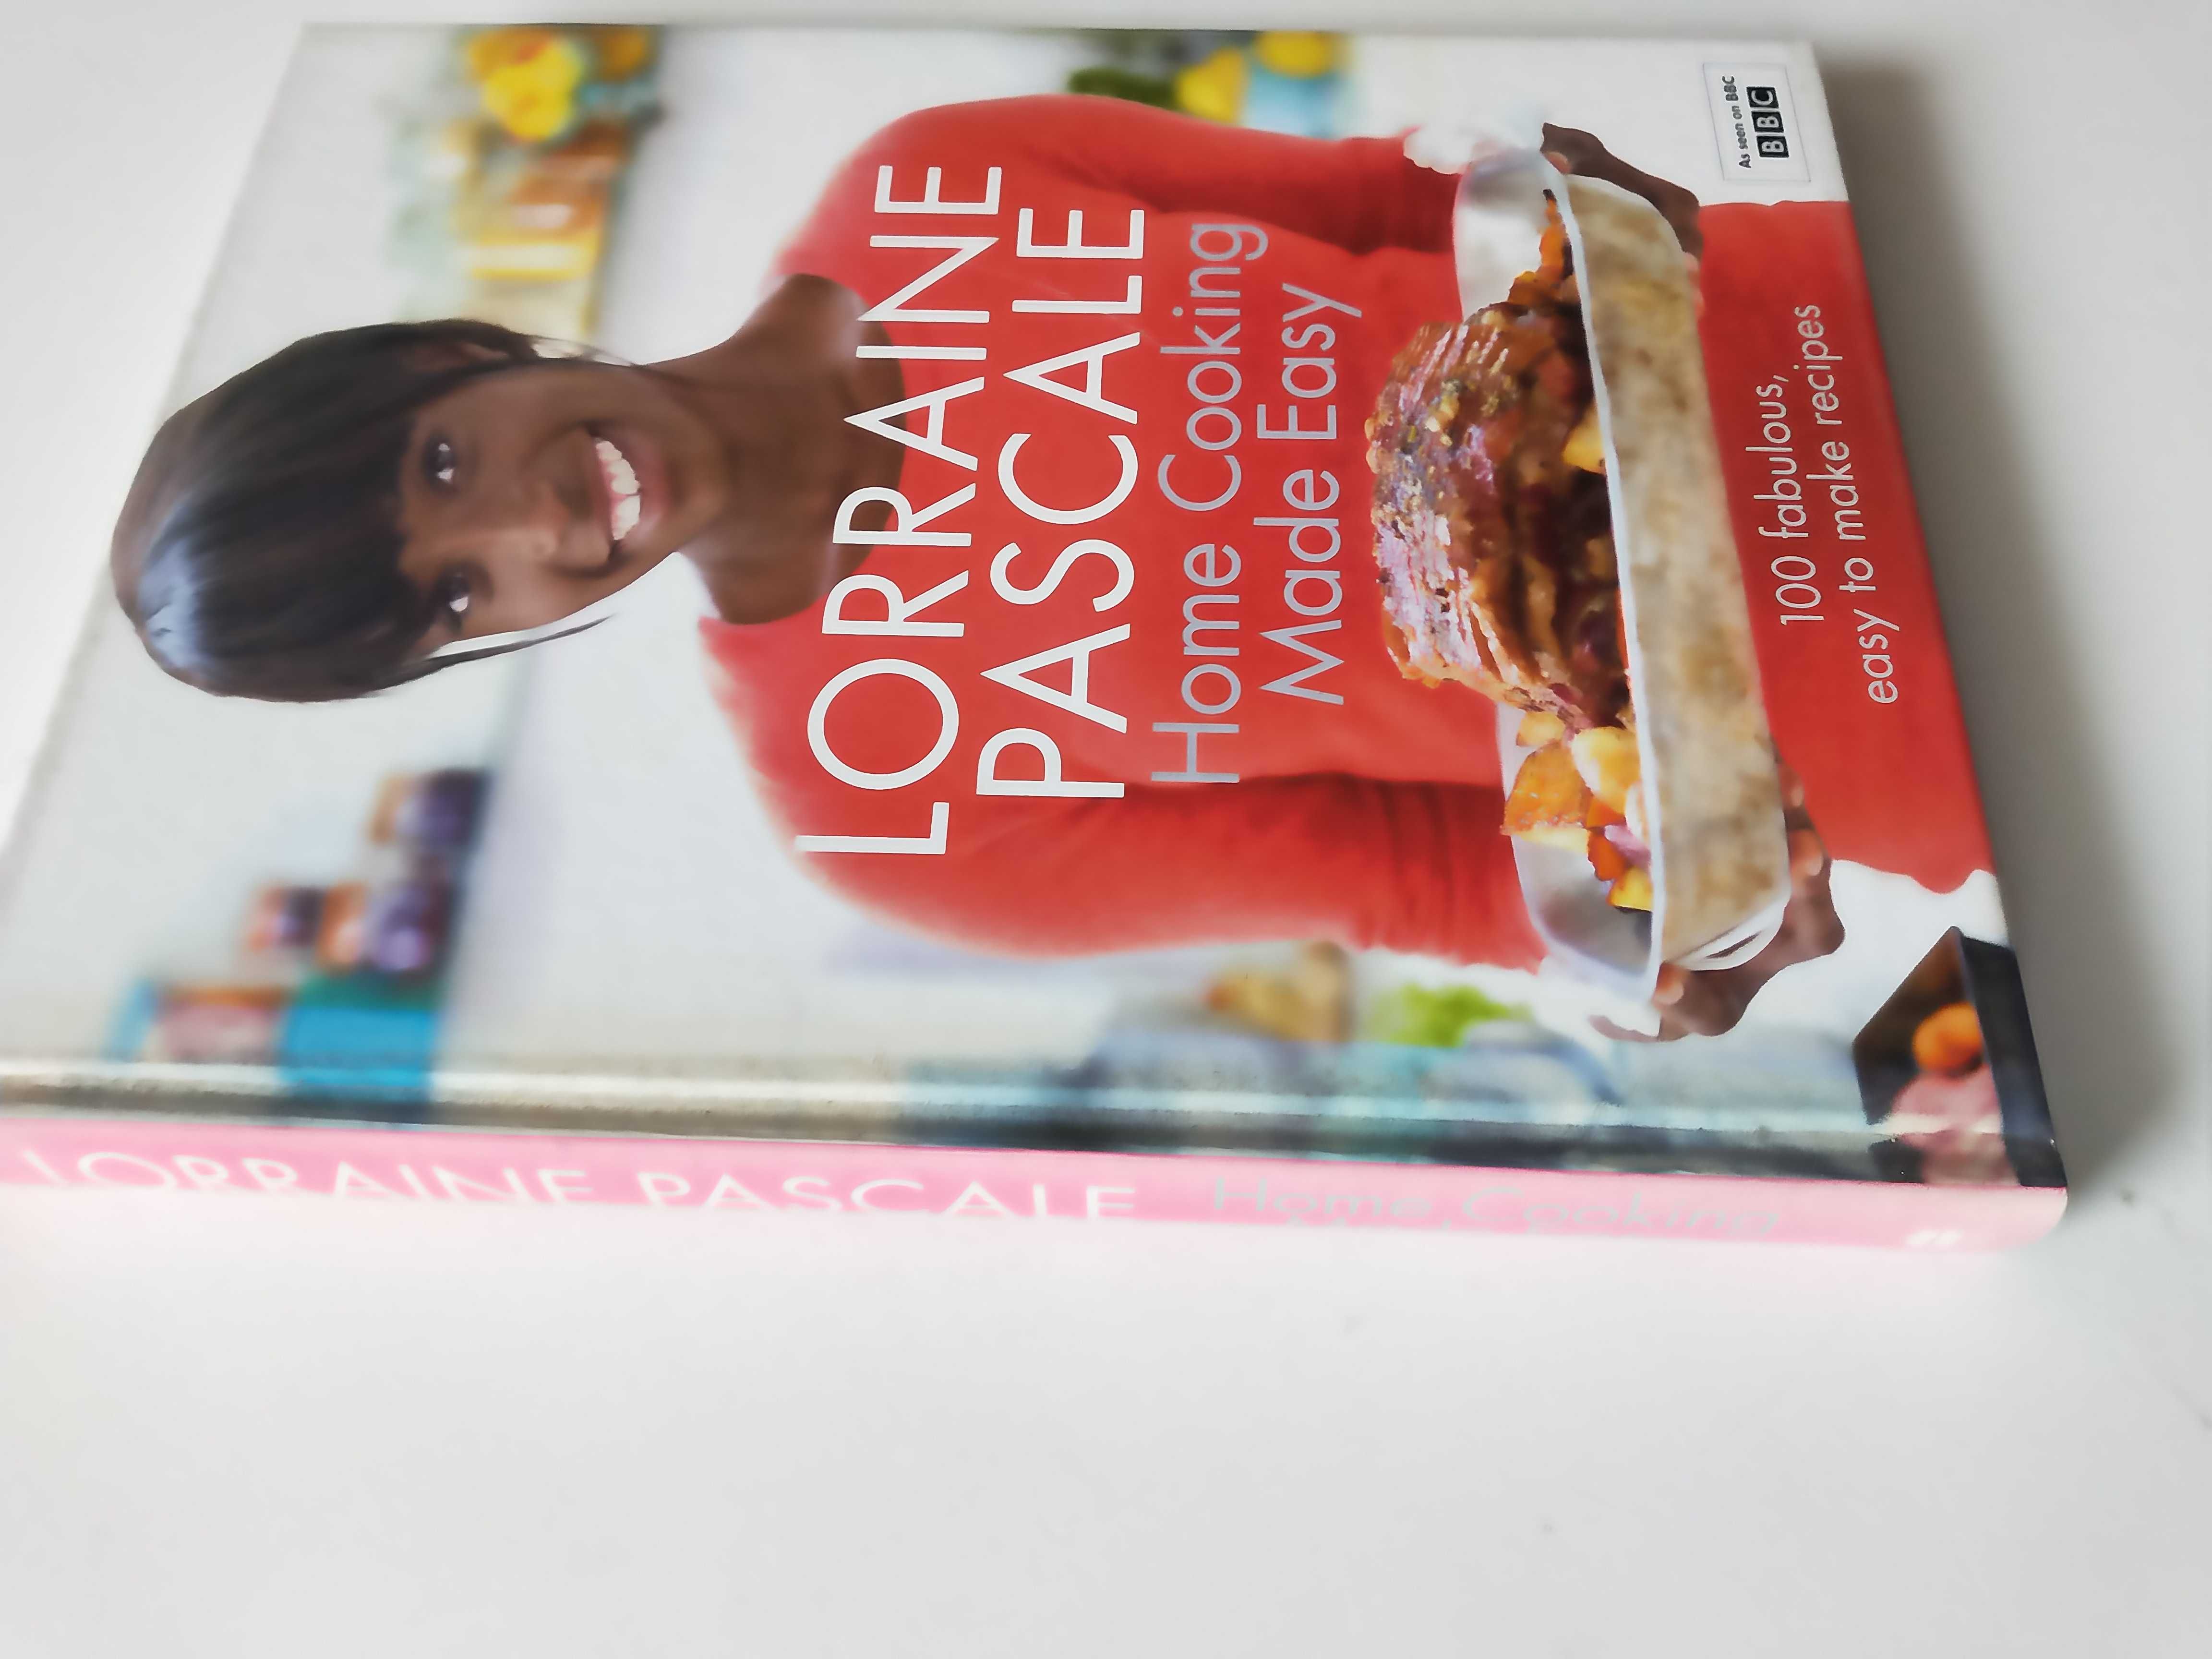 Home Cooking Made Easy - Lorraine Pascale [książka kulinarna] - ang.